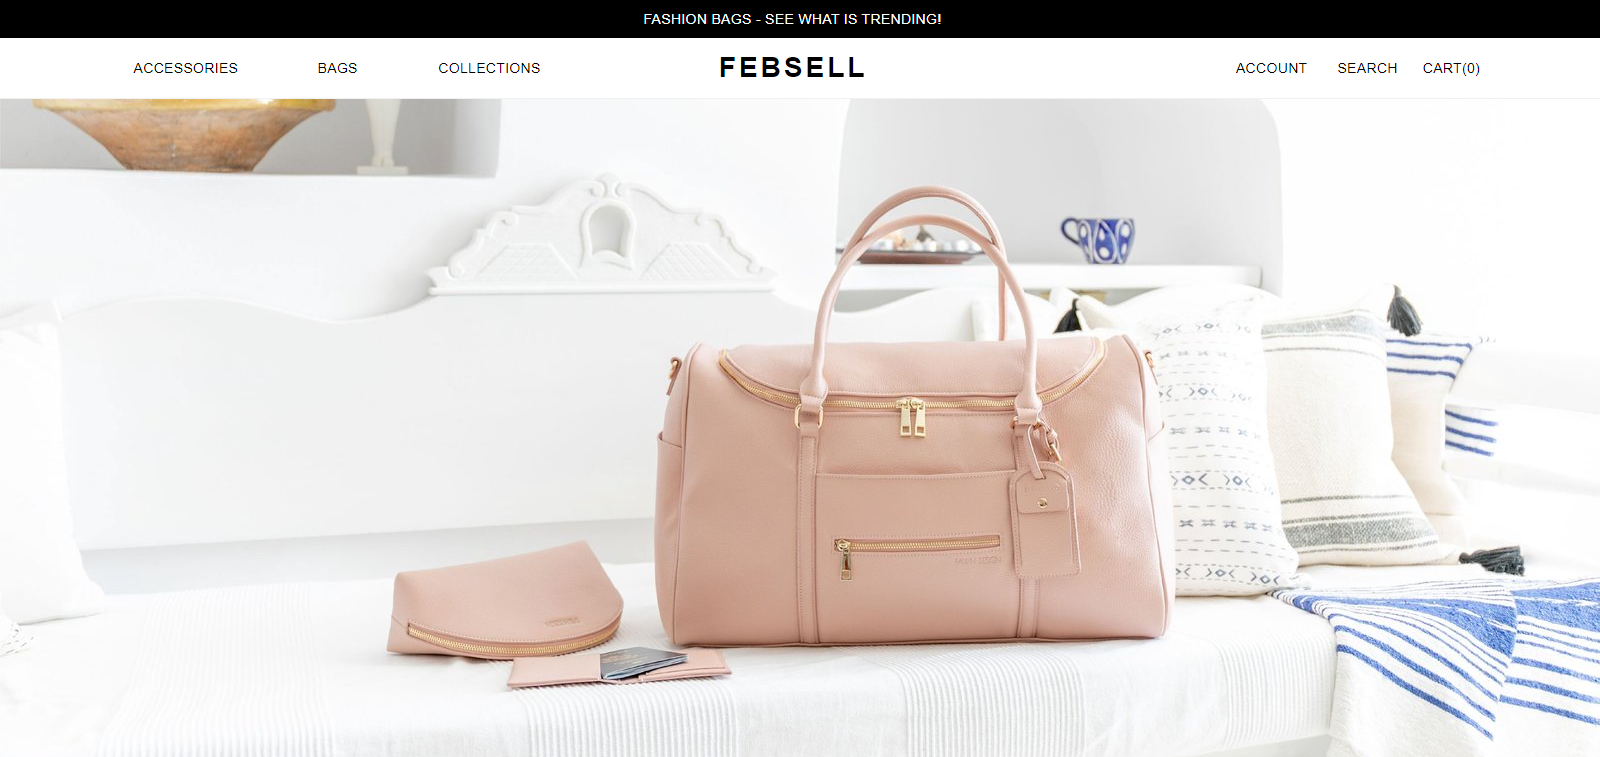 Febsell Homepage Image